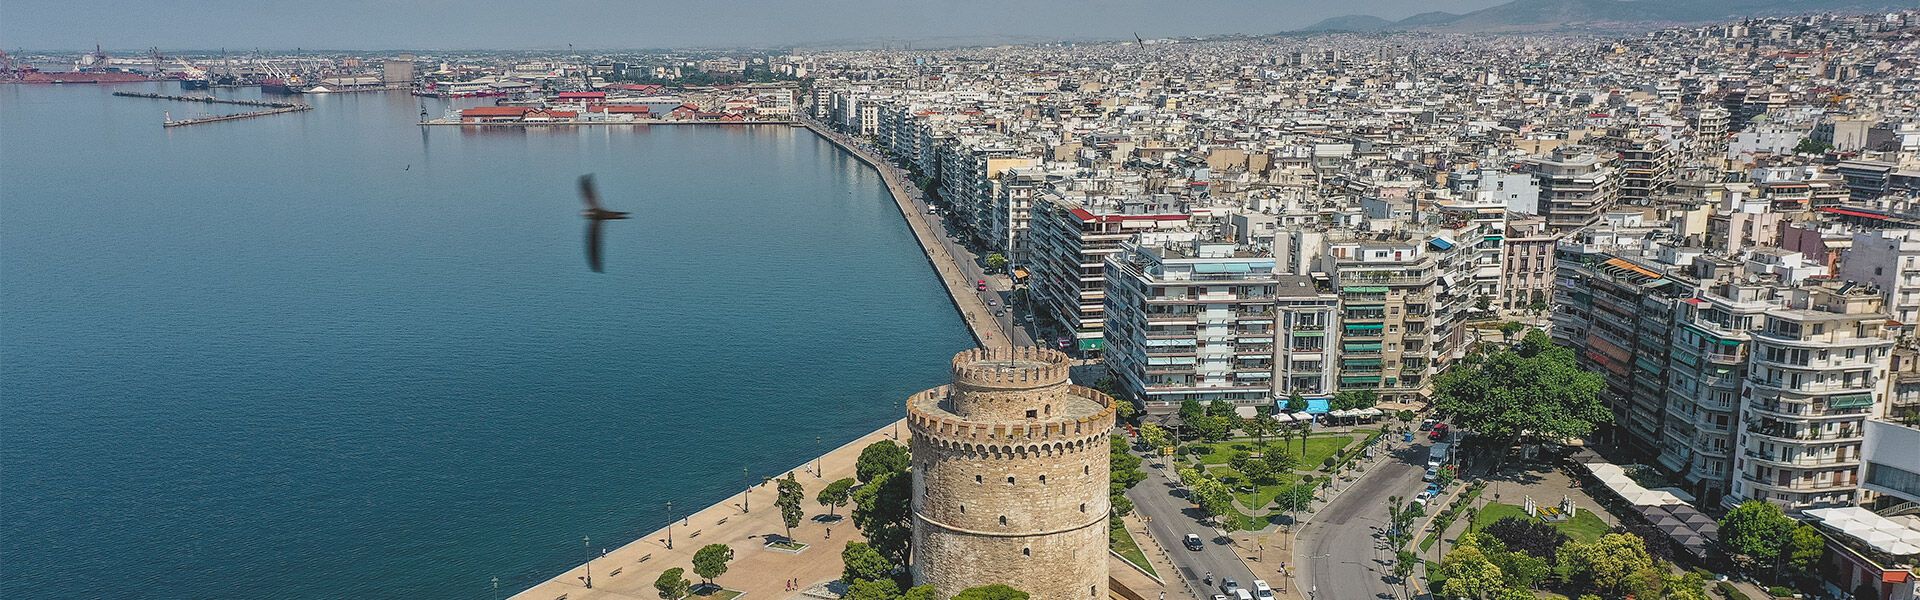 Thessalonikis' White Tower